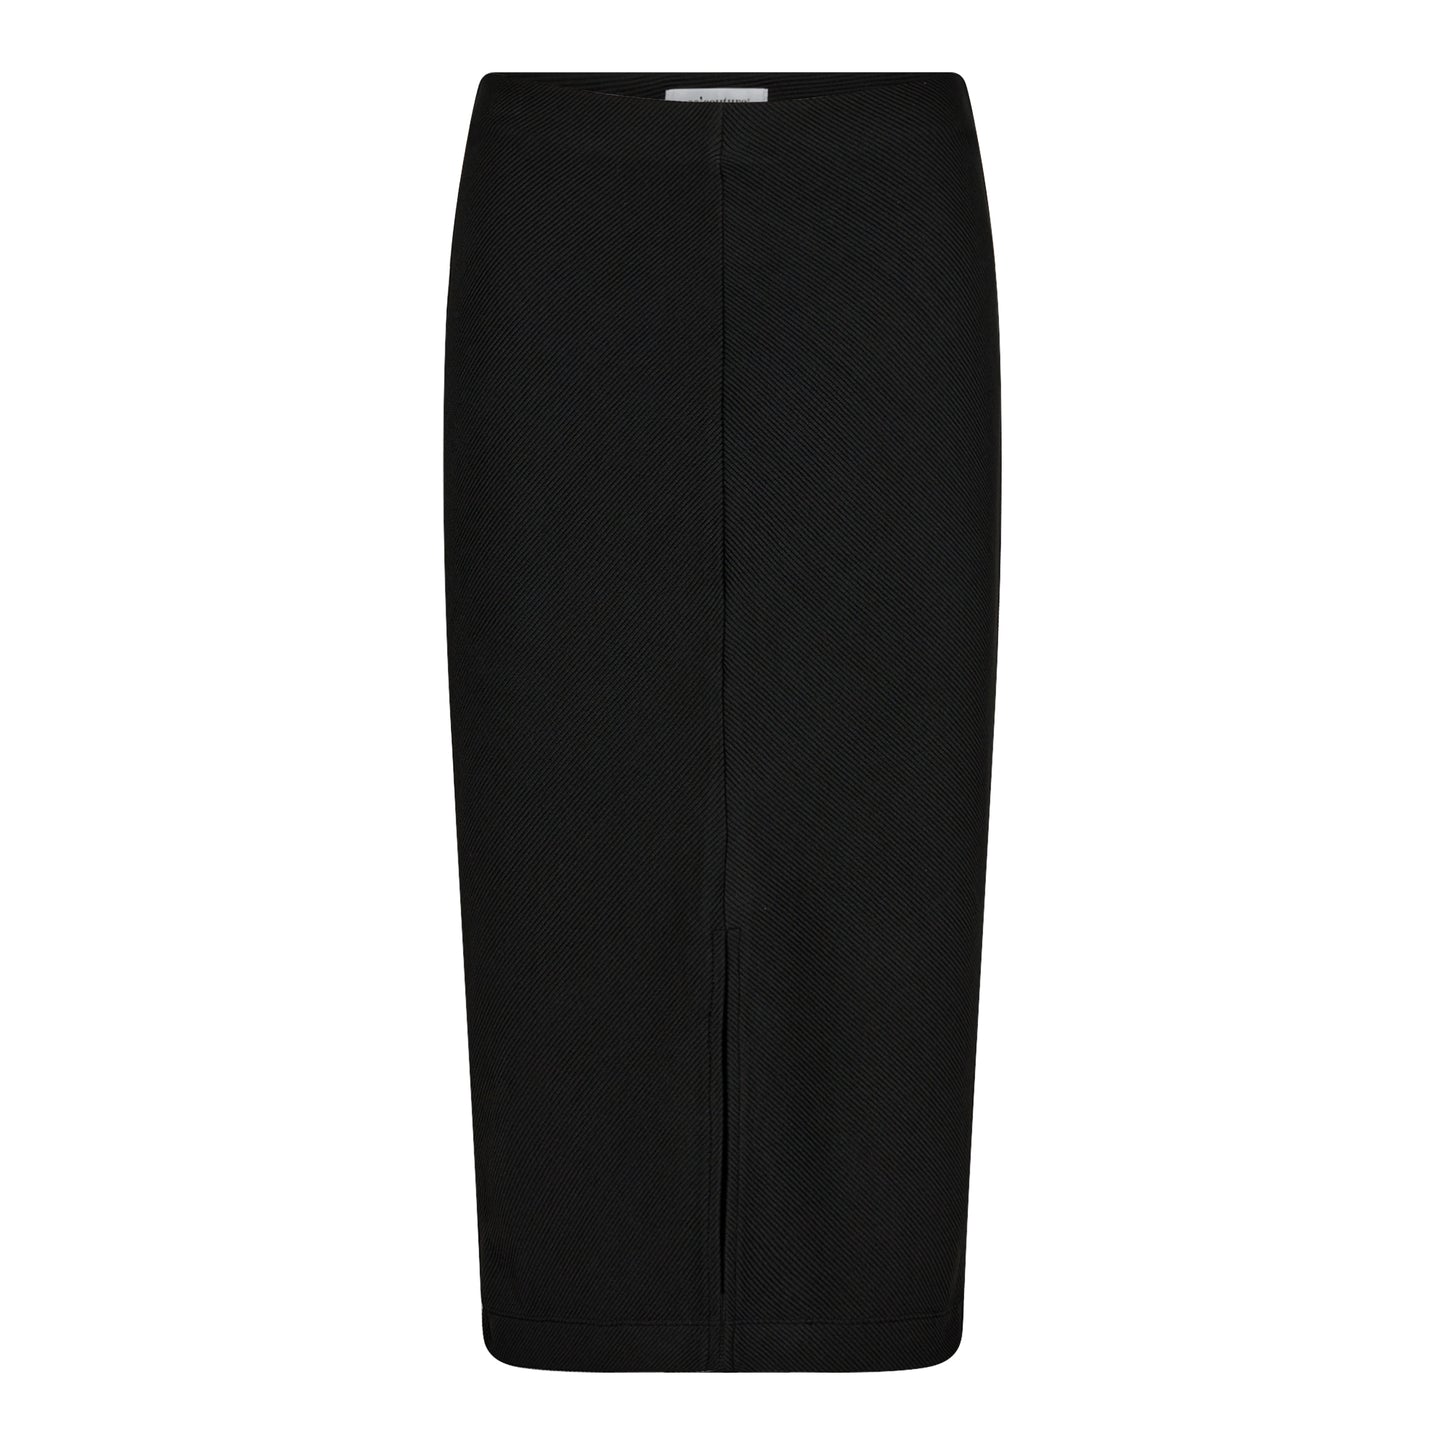 Cocouture - PicaCC Pencil Skirt - Black